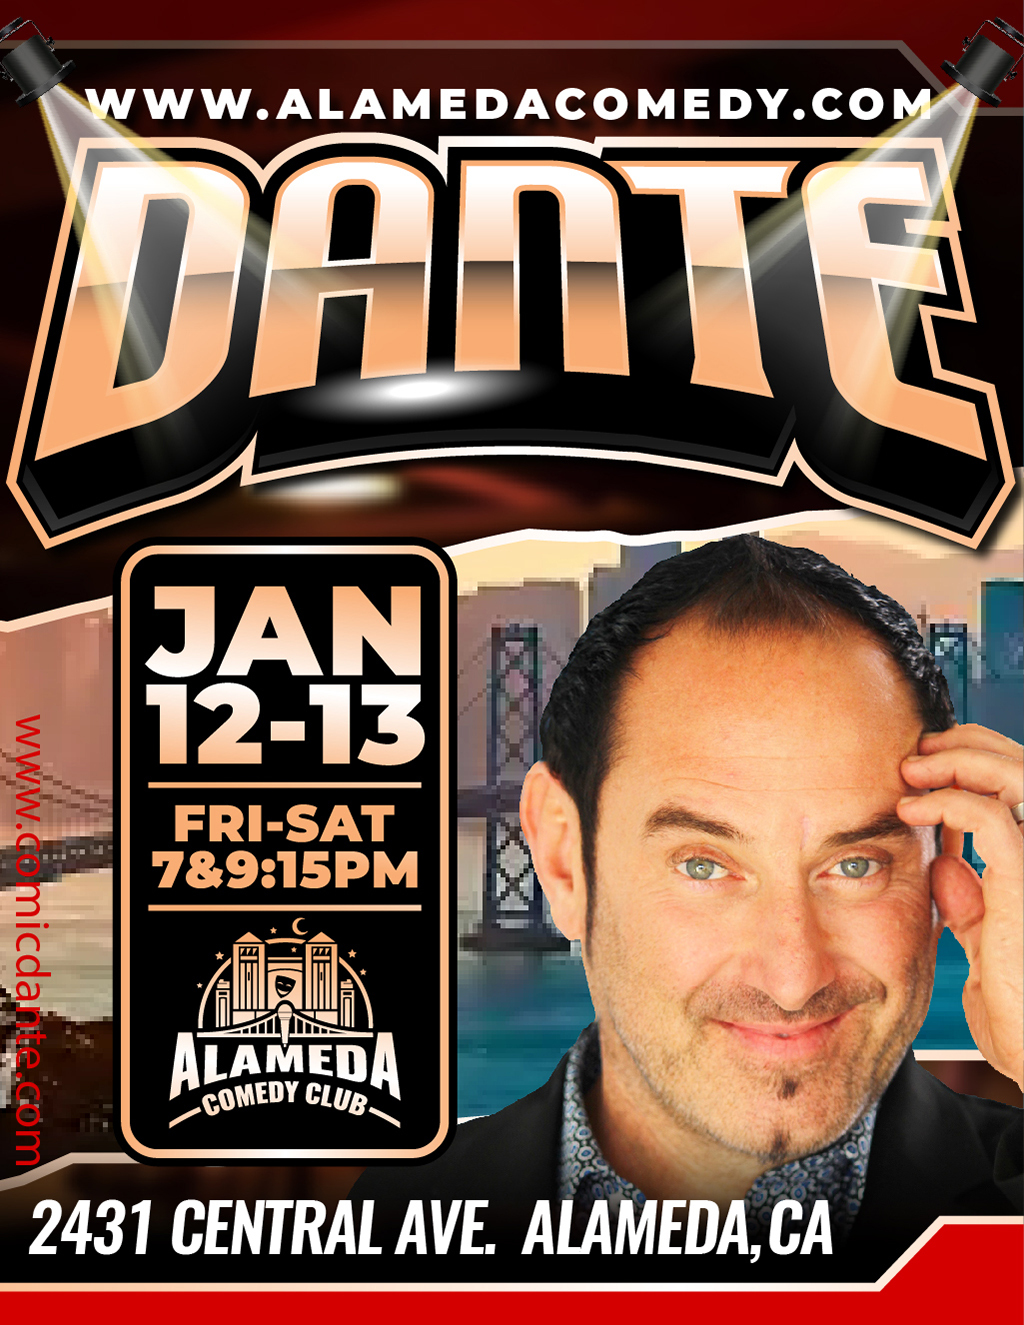 Alameda Comedy Club Join Us This Weekend at Alameda Comedy Club  JAN 12 13 FRI SAT 7 9 15PM promotion flier on Digifli com